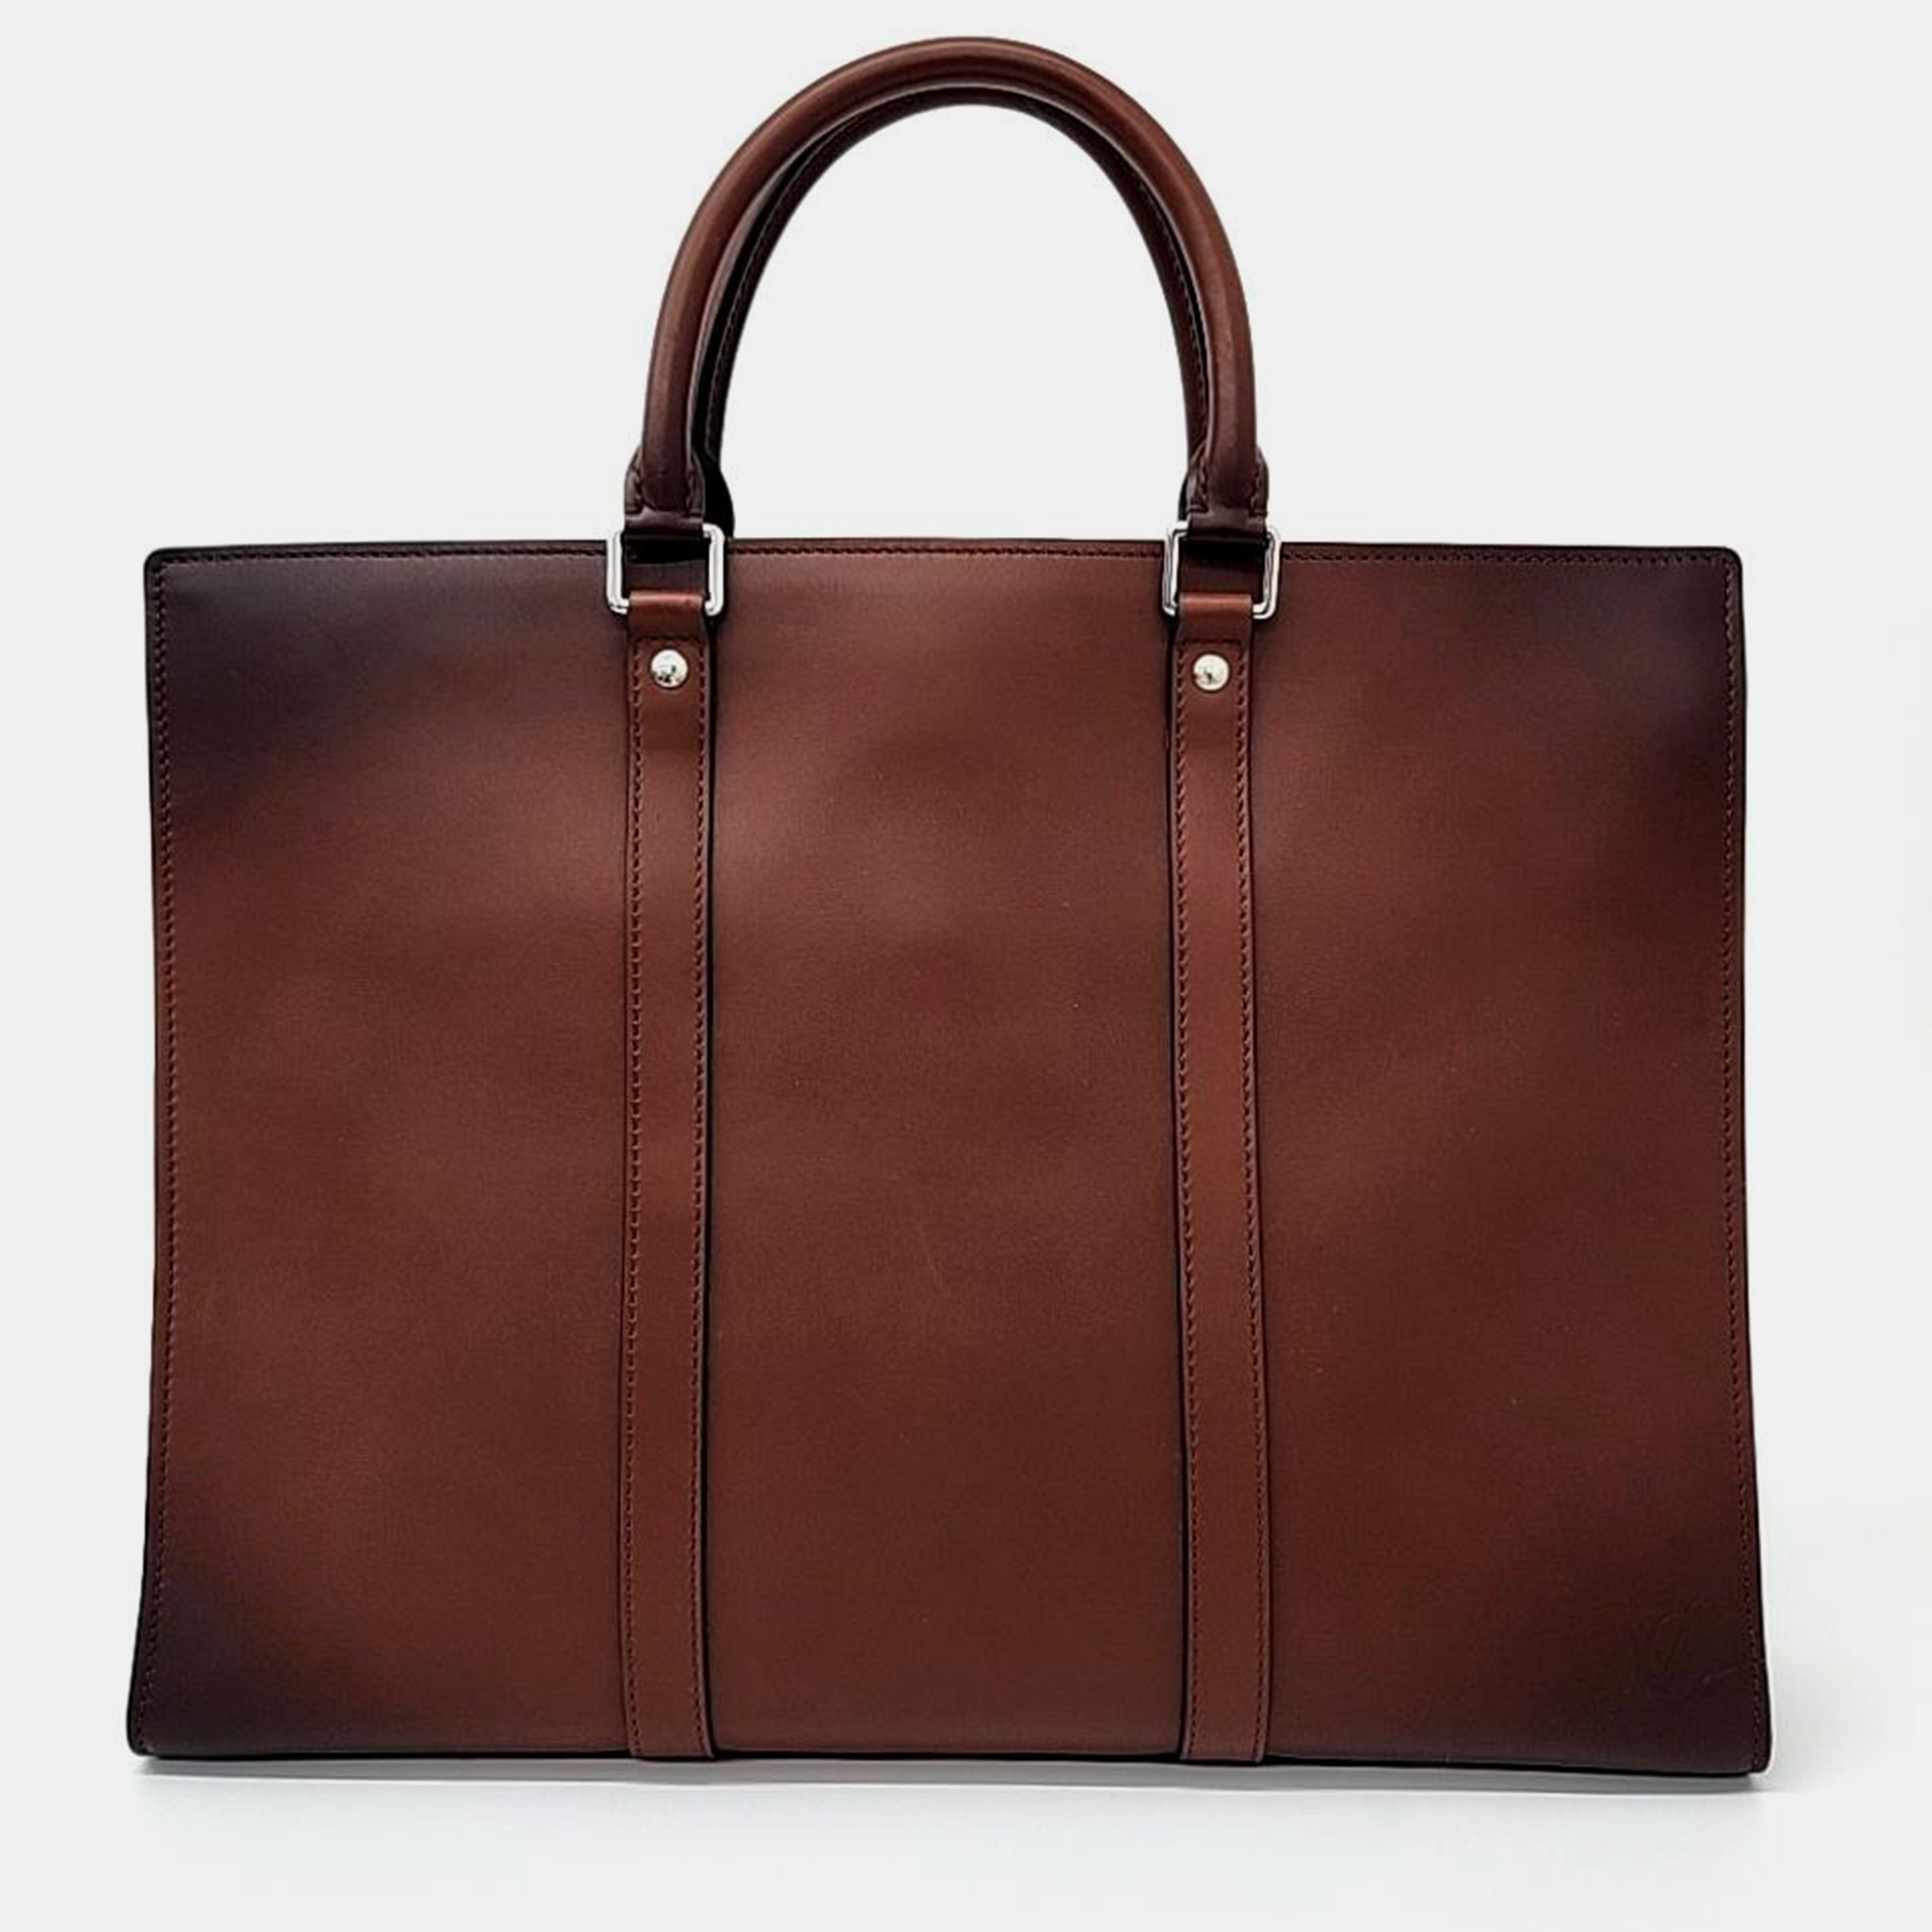 Louis vuitton brown leather sac plat horizontal zipper tote bag